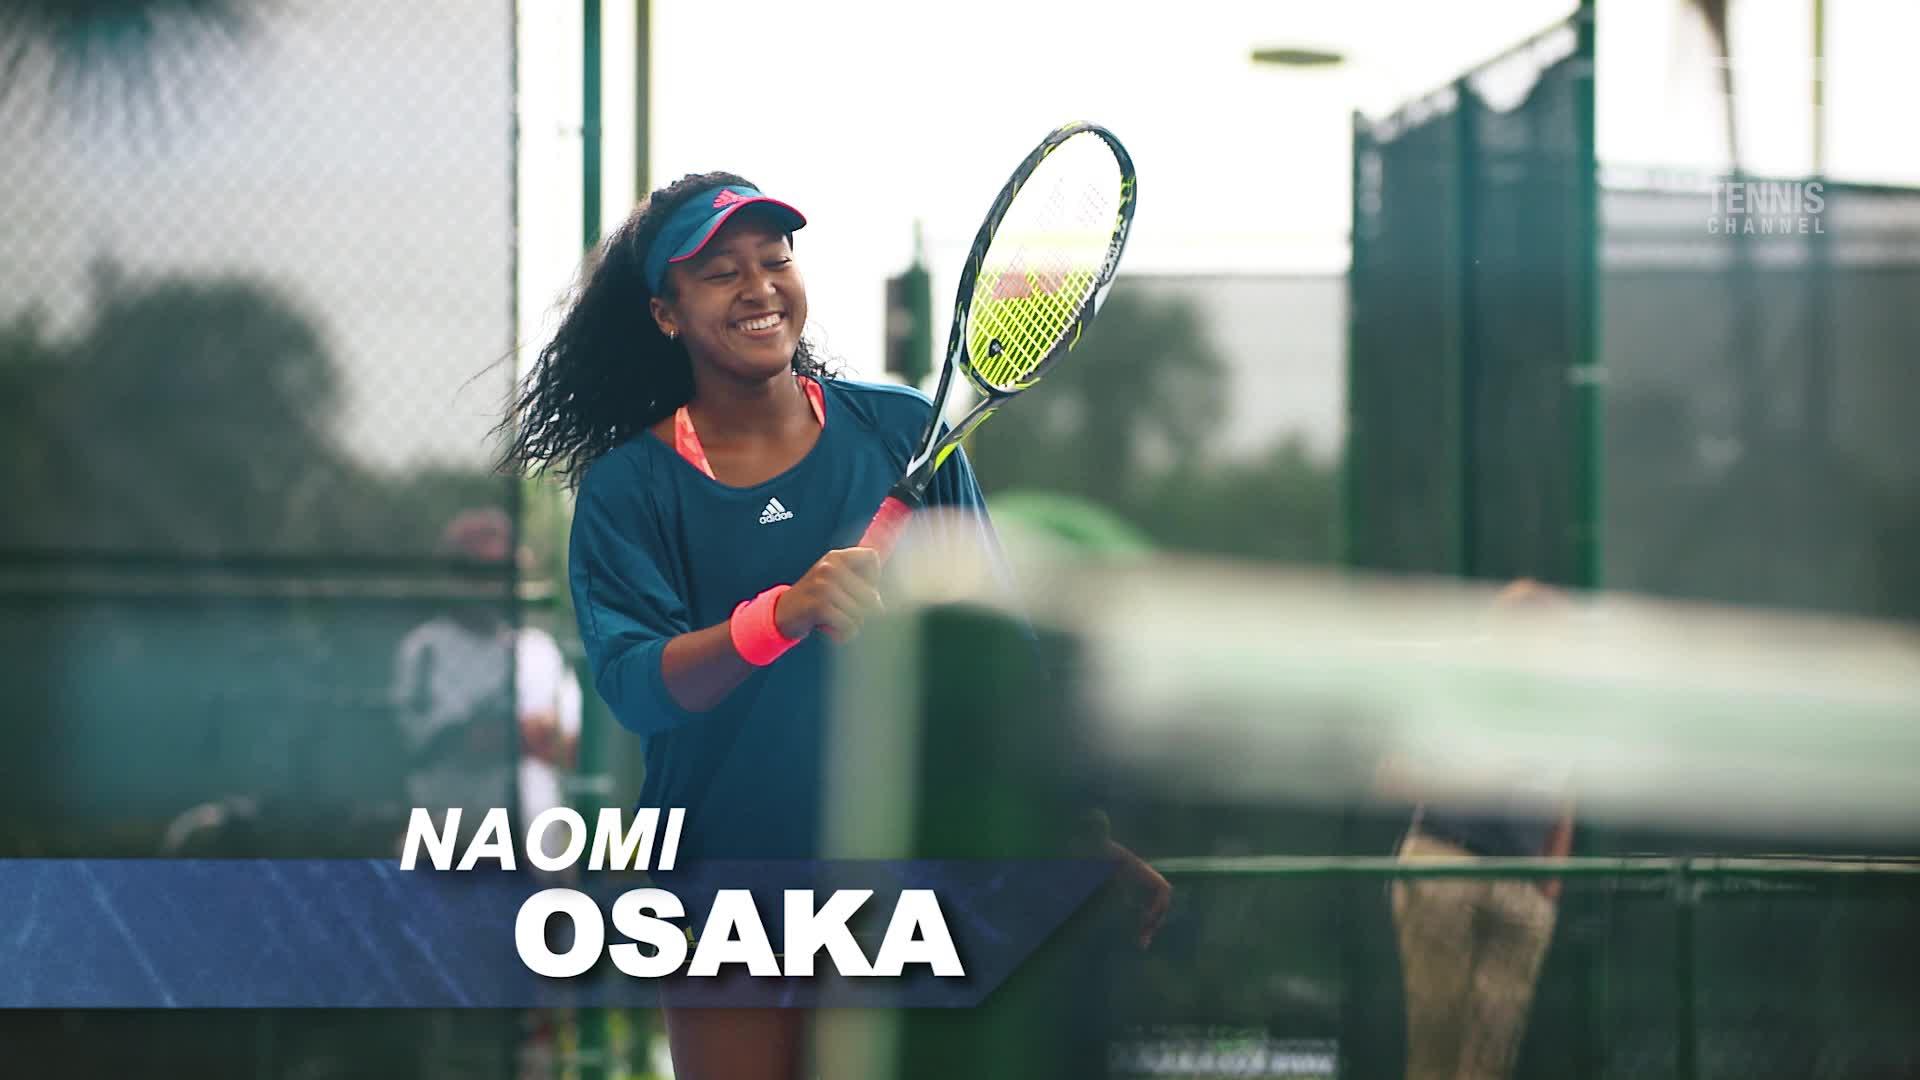 Tennis Channel Everywhere to Watch: Naomi Osaka